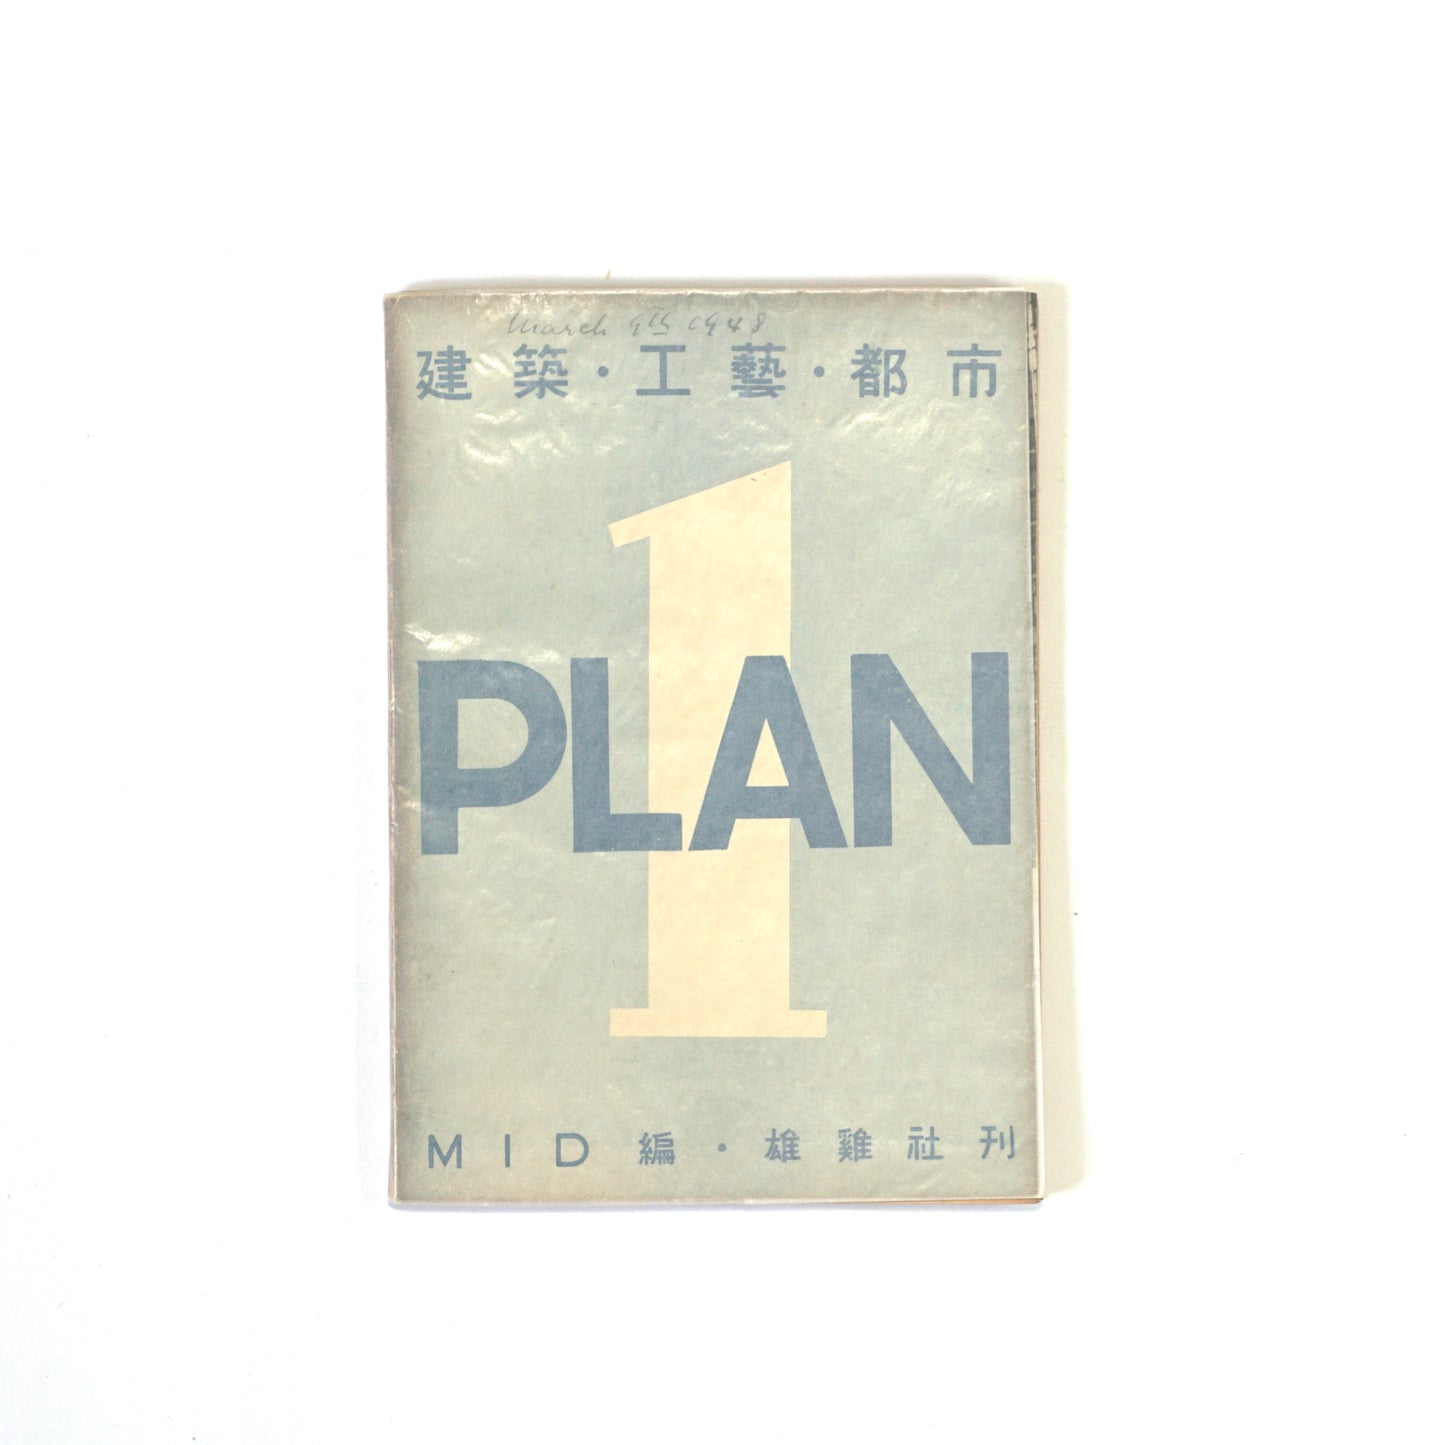 PLAN 1 1948 edition 